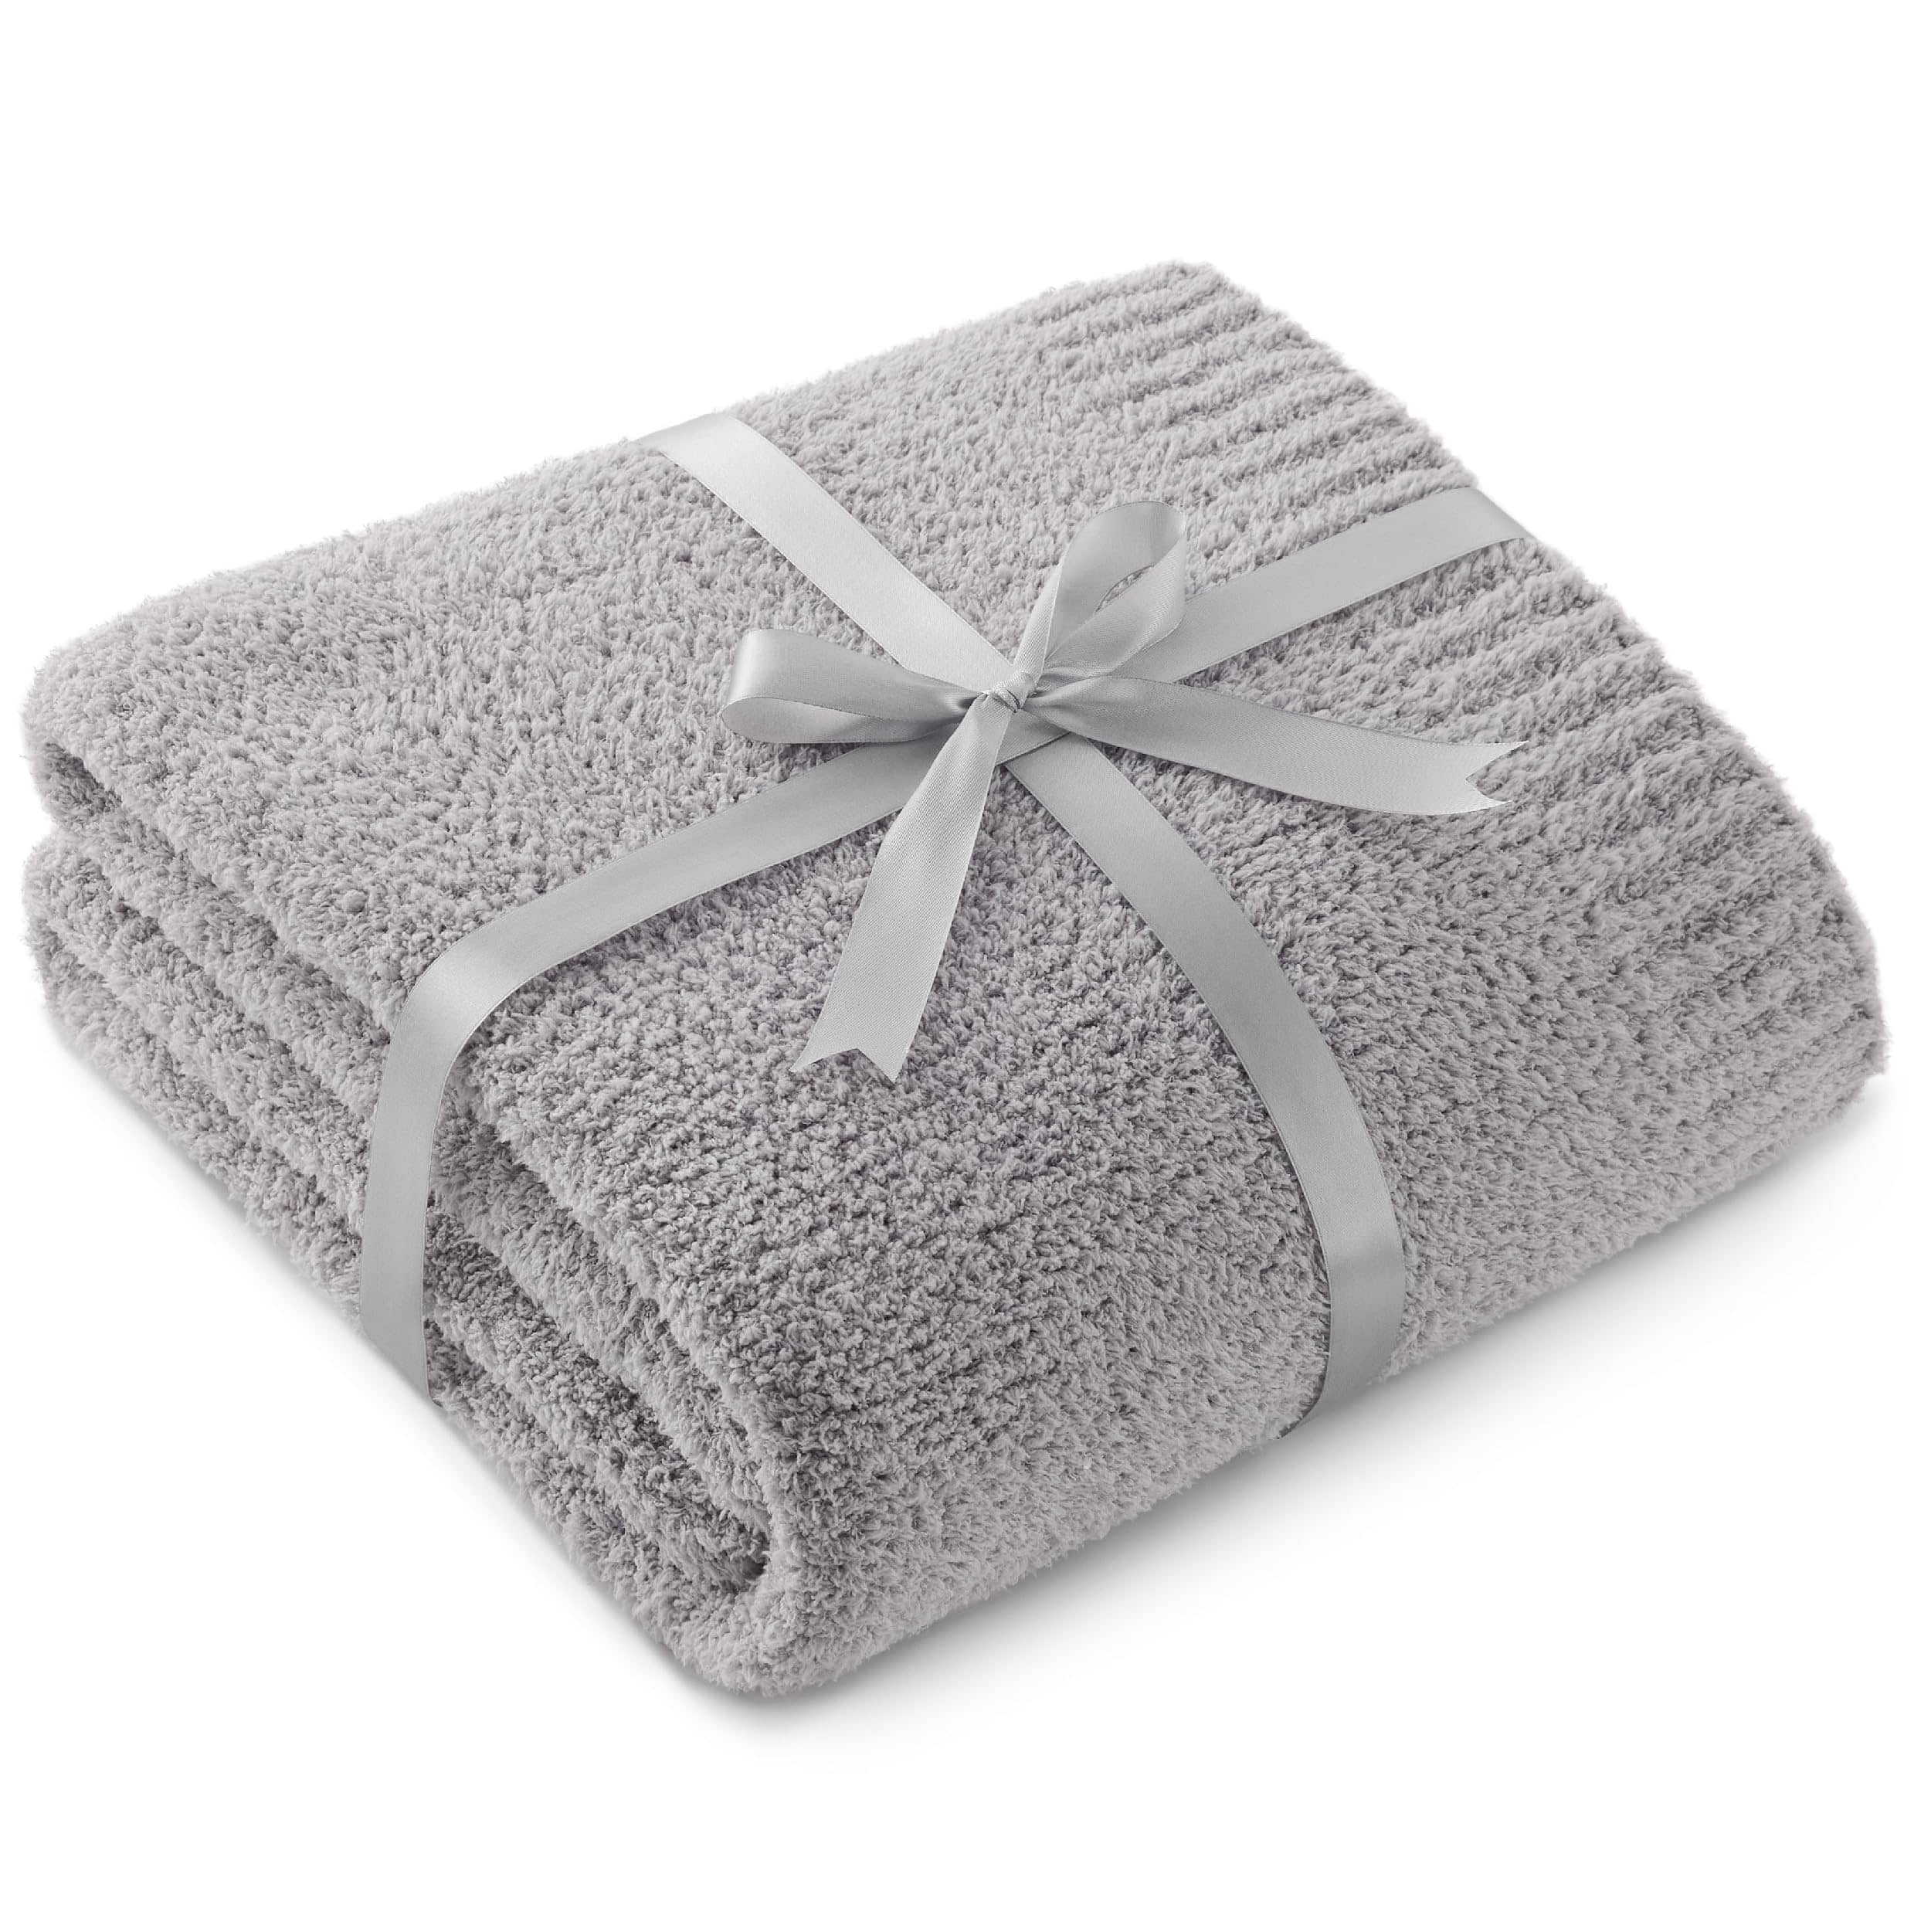 Bedsure Fluffy Fuzzy Plush Knit Throw Blanket